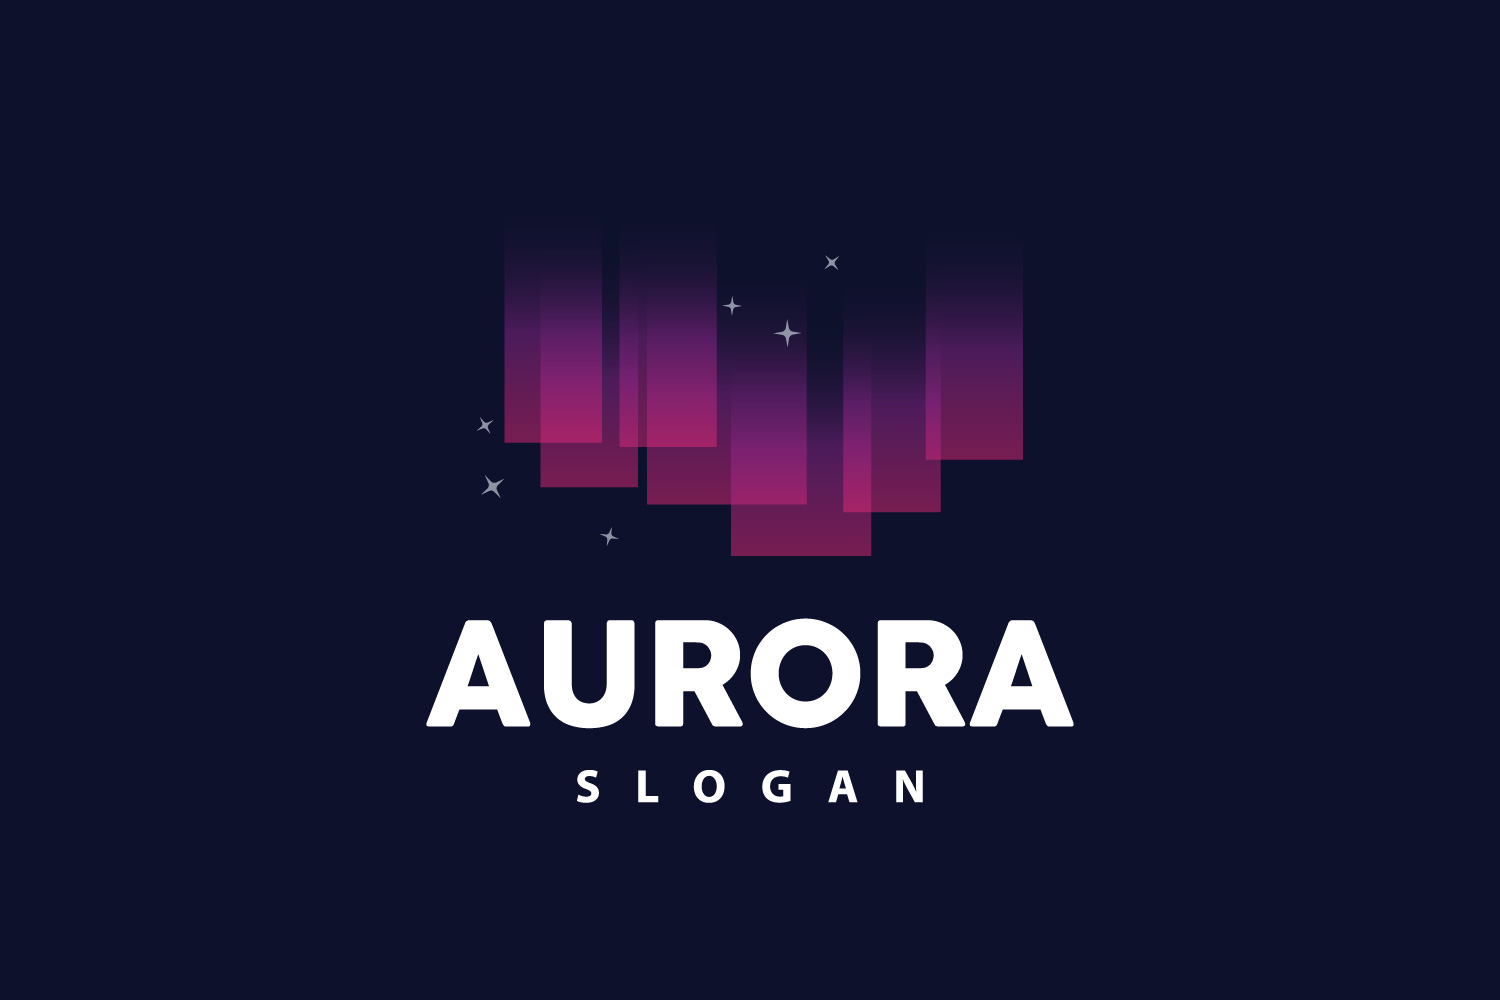 Aurora Light Wave Sky View LogoV1